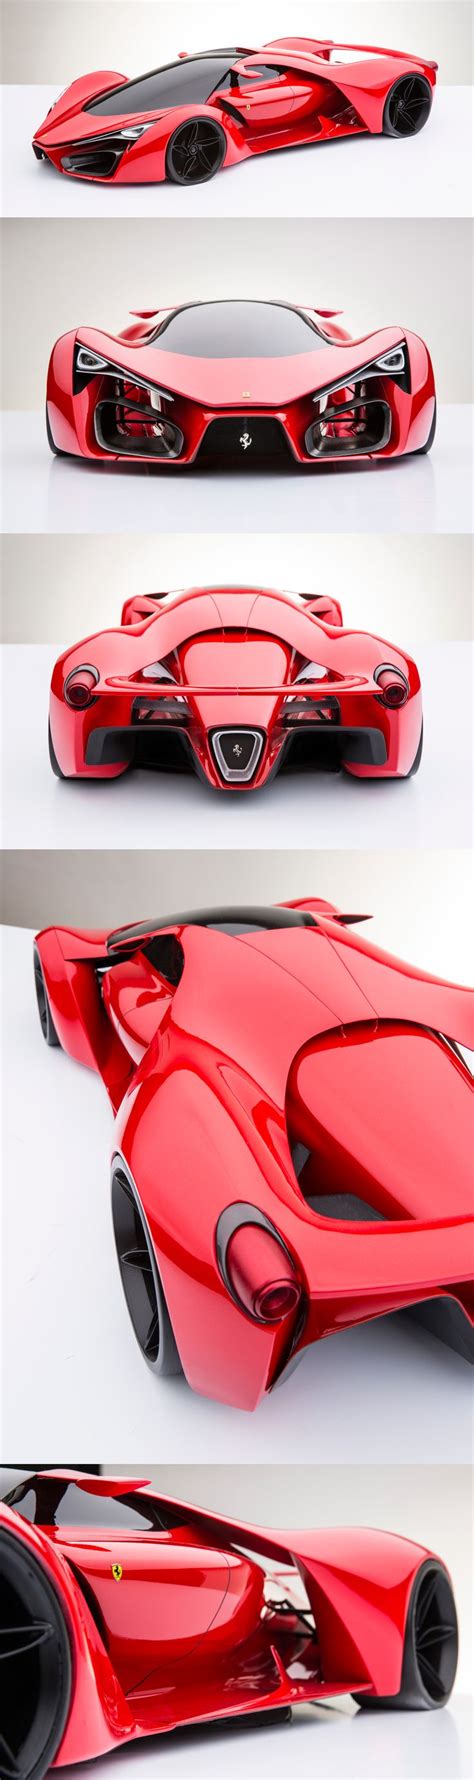 Ferrari F80 Ferrari Concept Ferrari F80 Concept Cars Super Cars